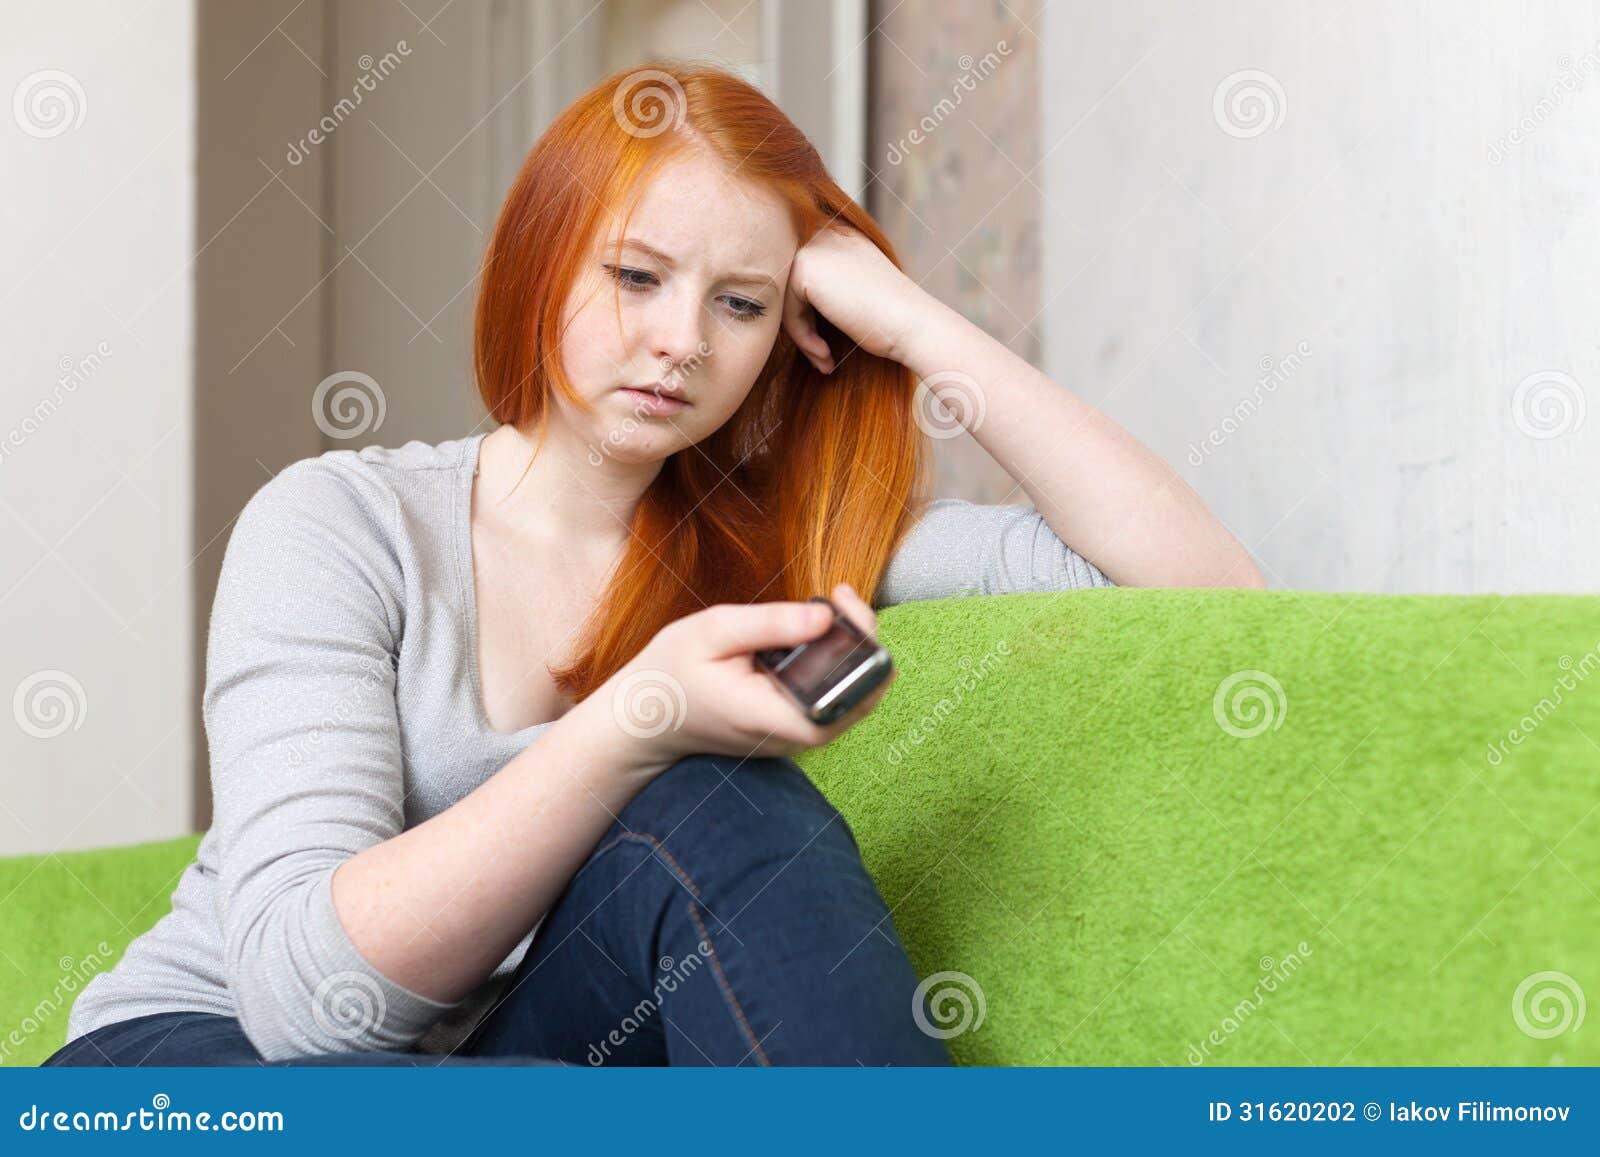 teenager waits telephone call after quarrel